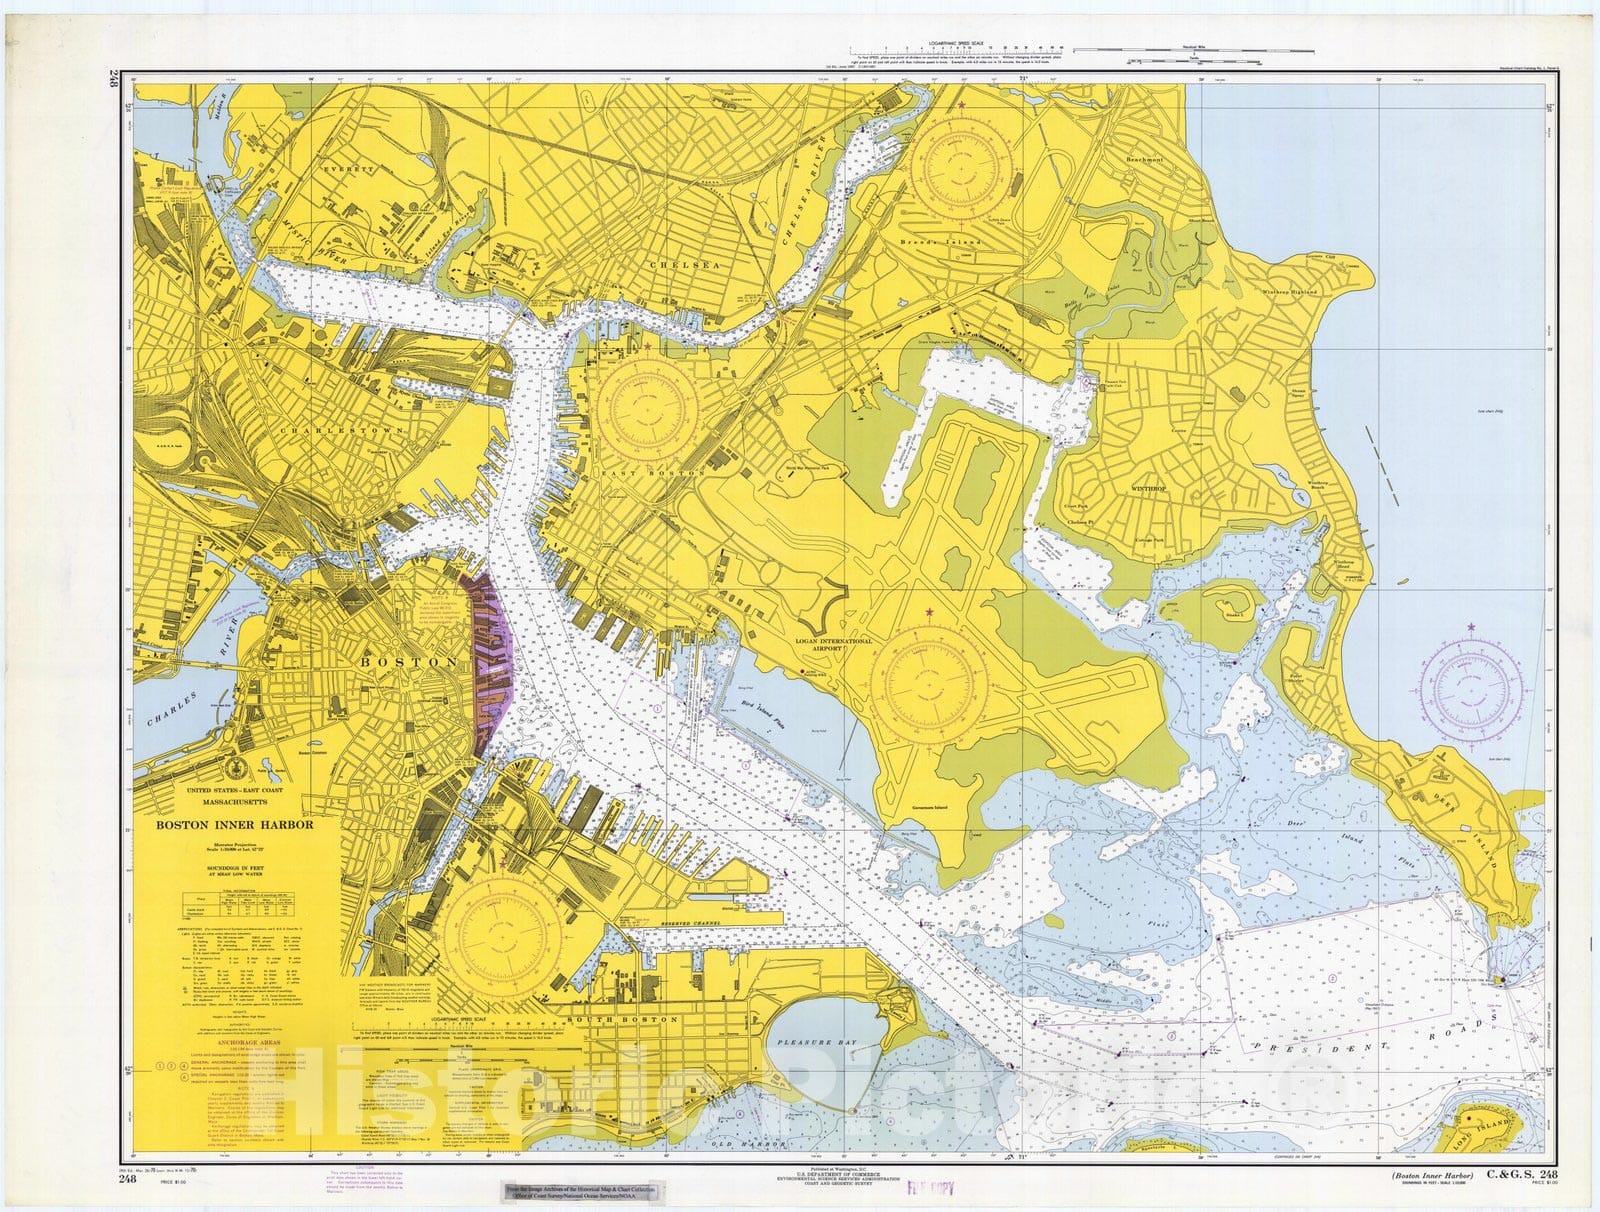 Historic Historic Nautical Map - Boston Inner Harbor, 1970 NOAA Chart - Antique Vintage Decor Poster Wall Art Reproduction